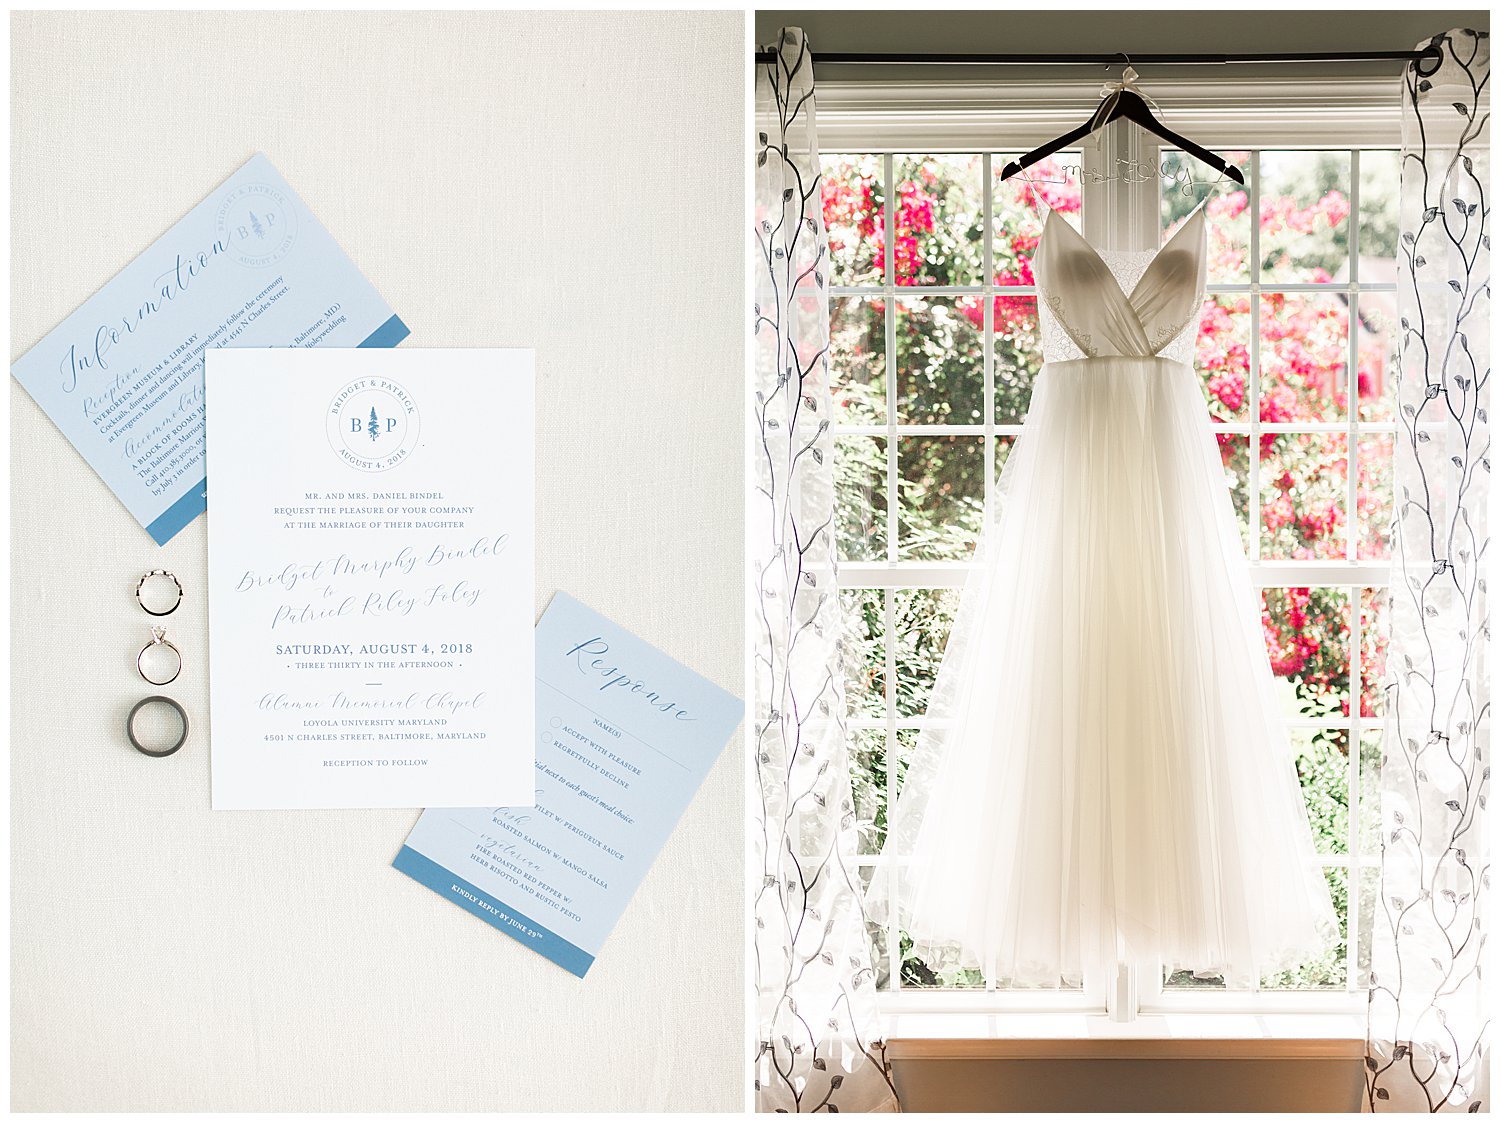 Bridal details invitation and dress